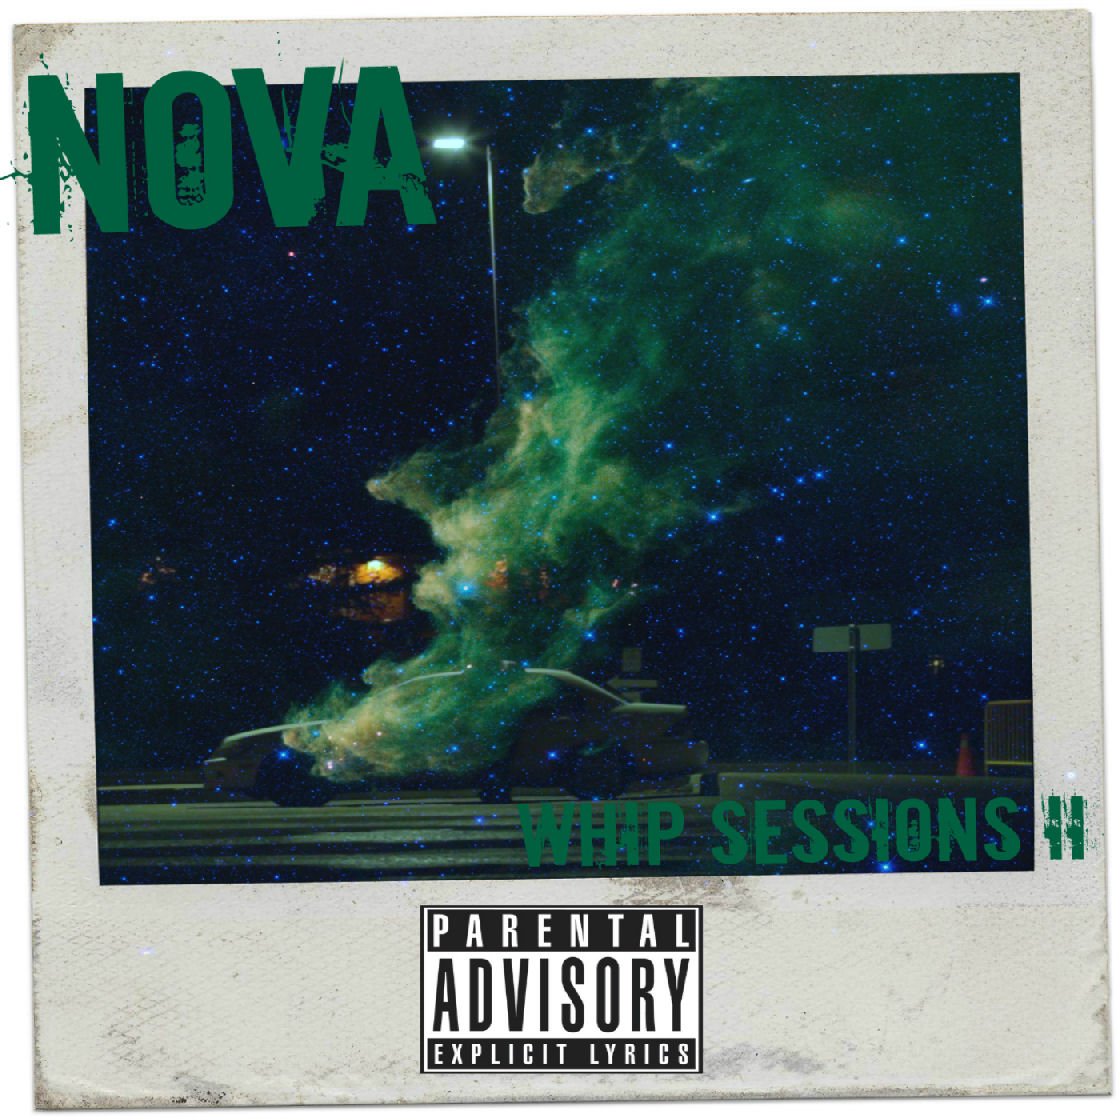  N0va – Whip Sessions II